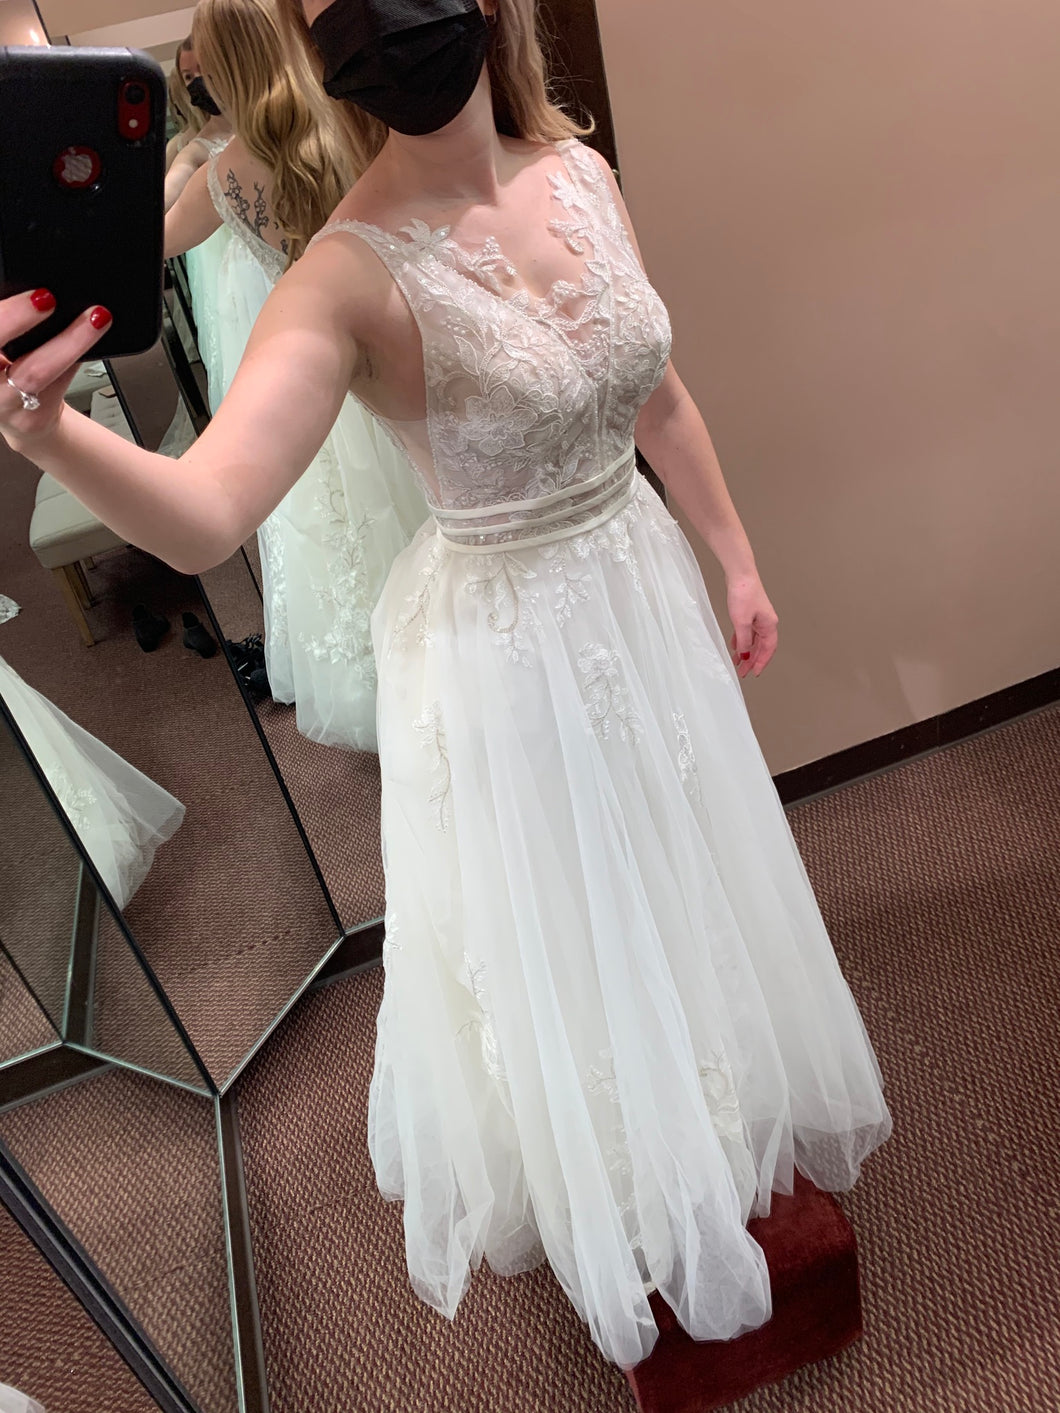 Maggie Sottero 'Raelynn' wedding dress size-04 NEW